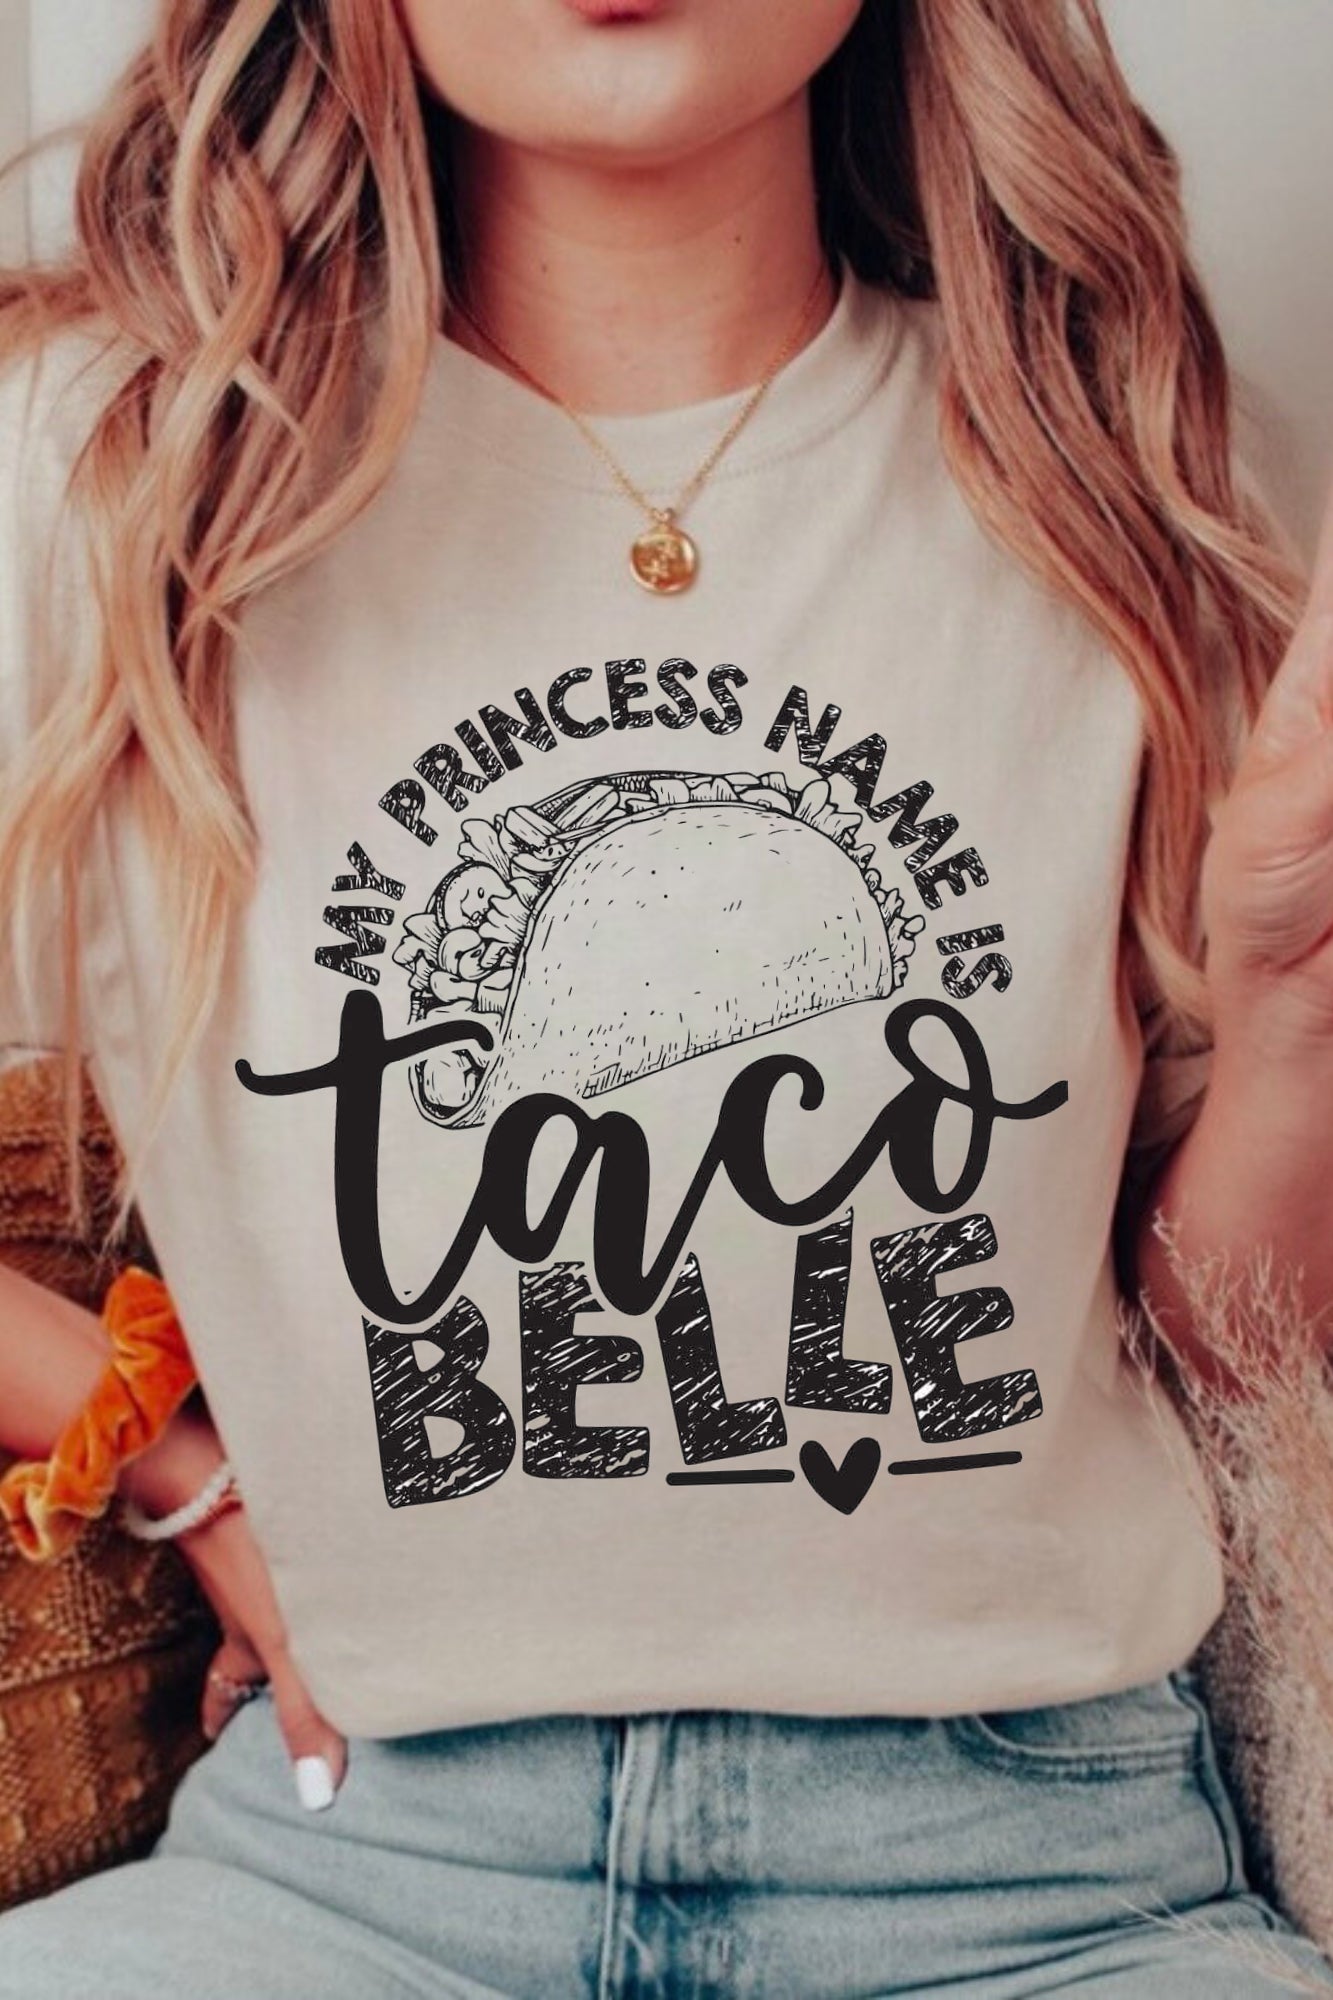 Taco Belle